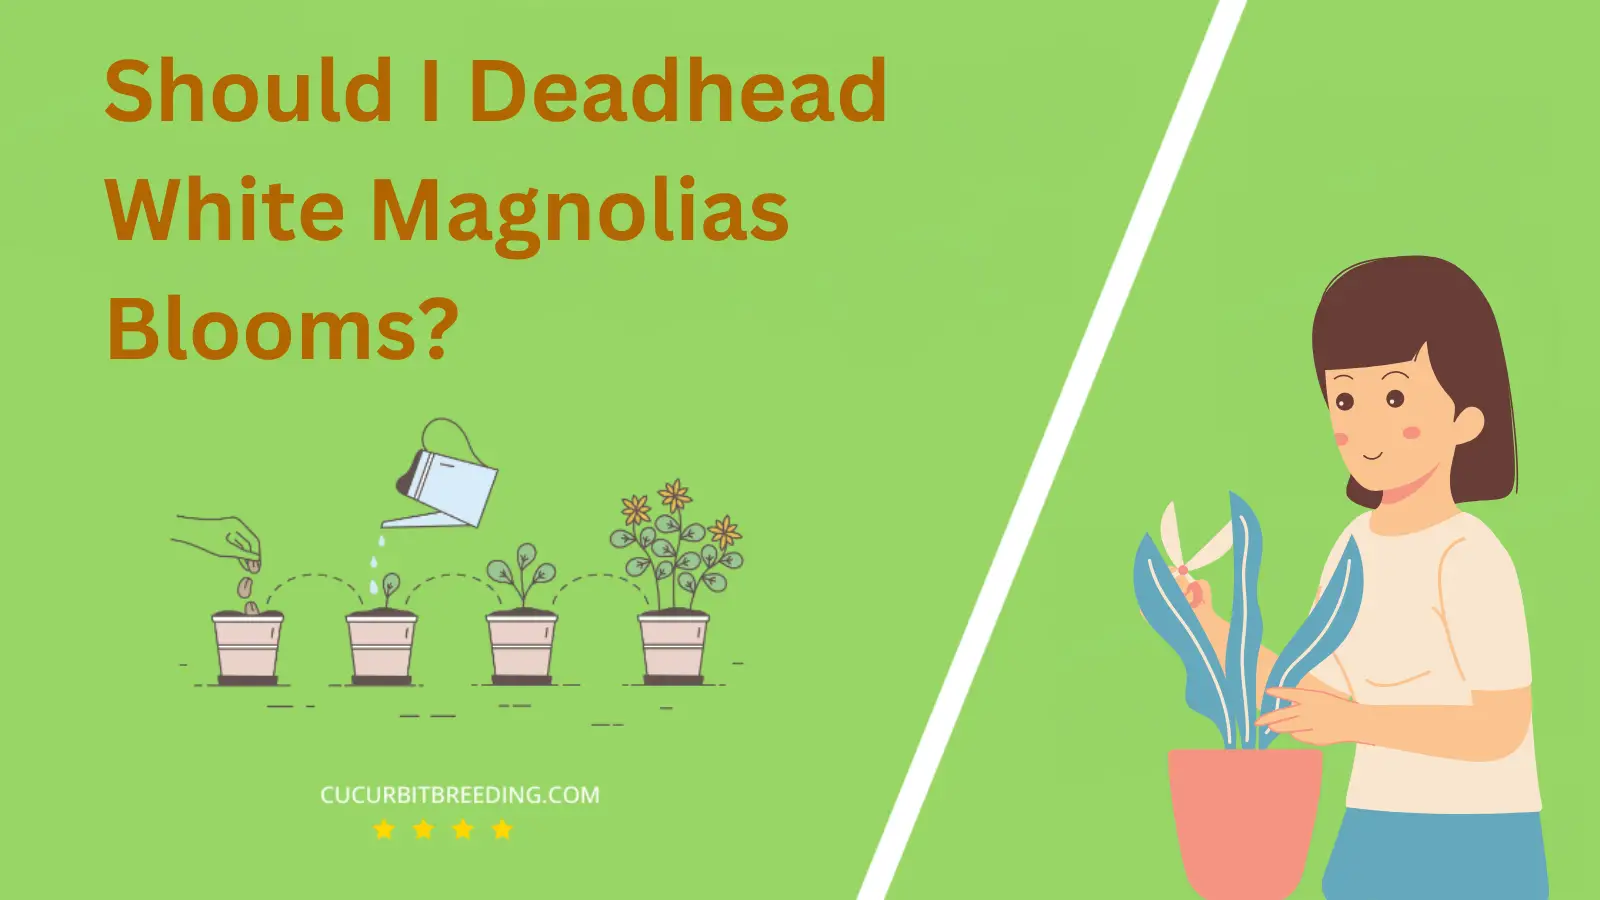 Should I Deadhead White Magnolias Blooms?